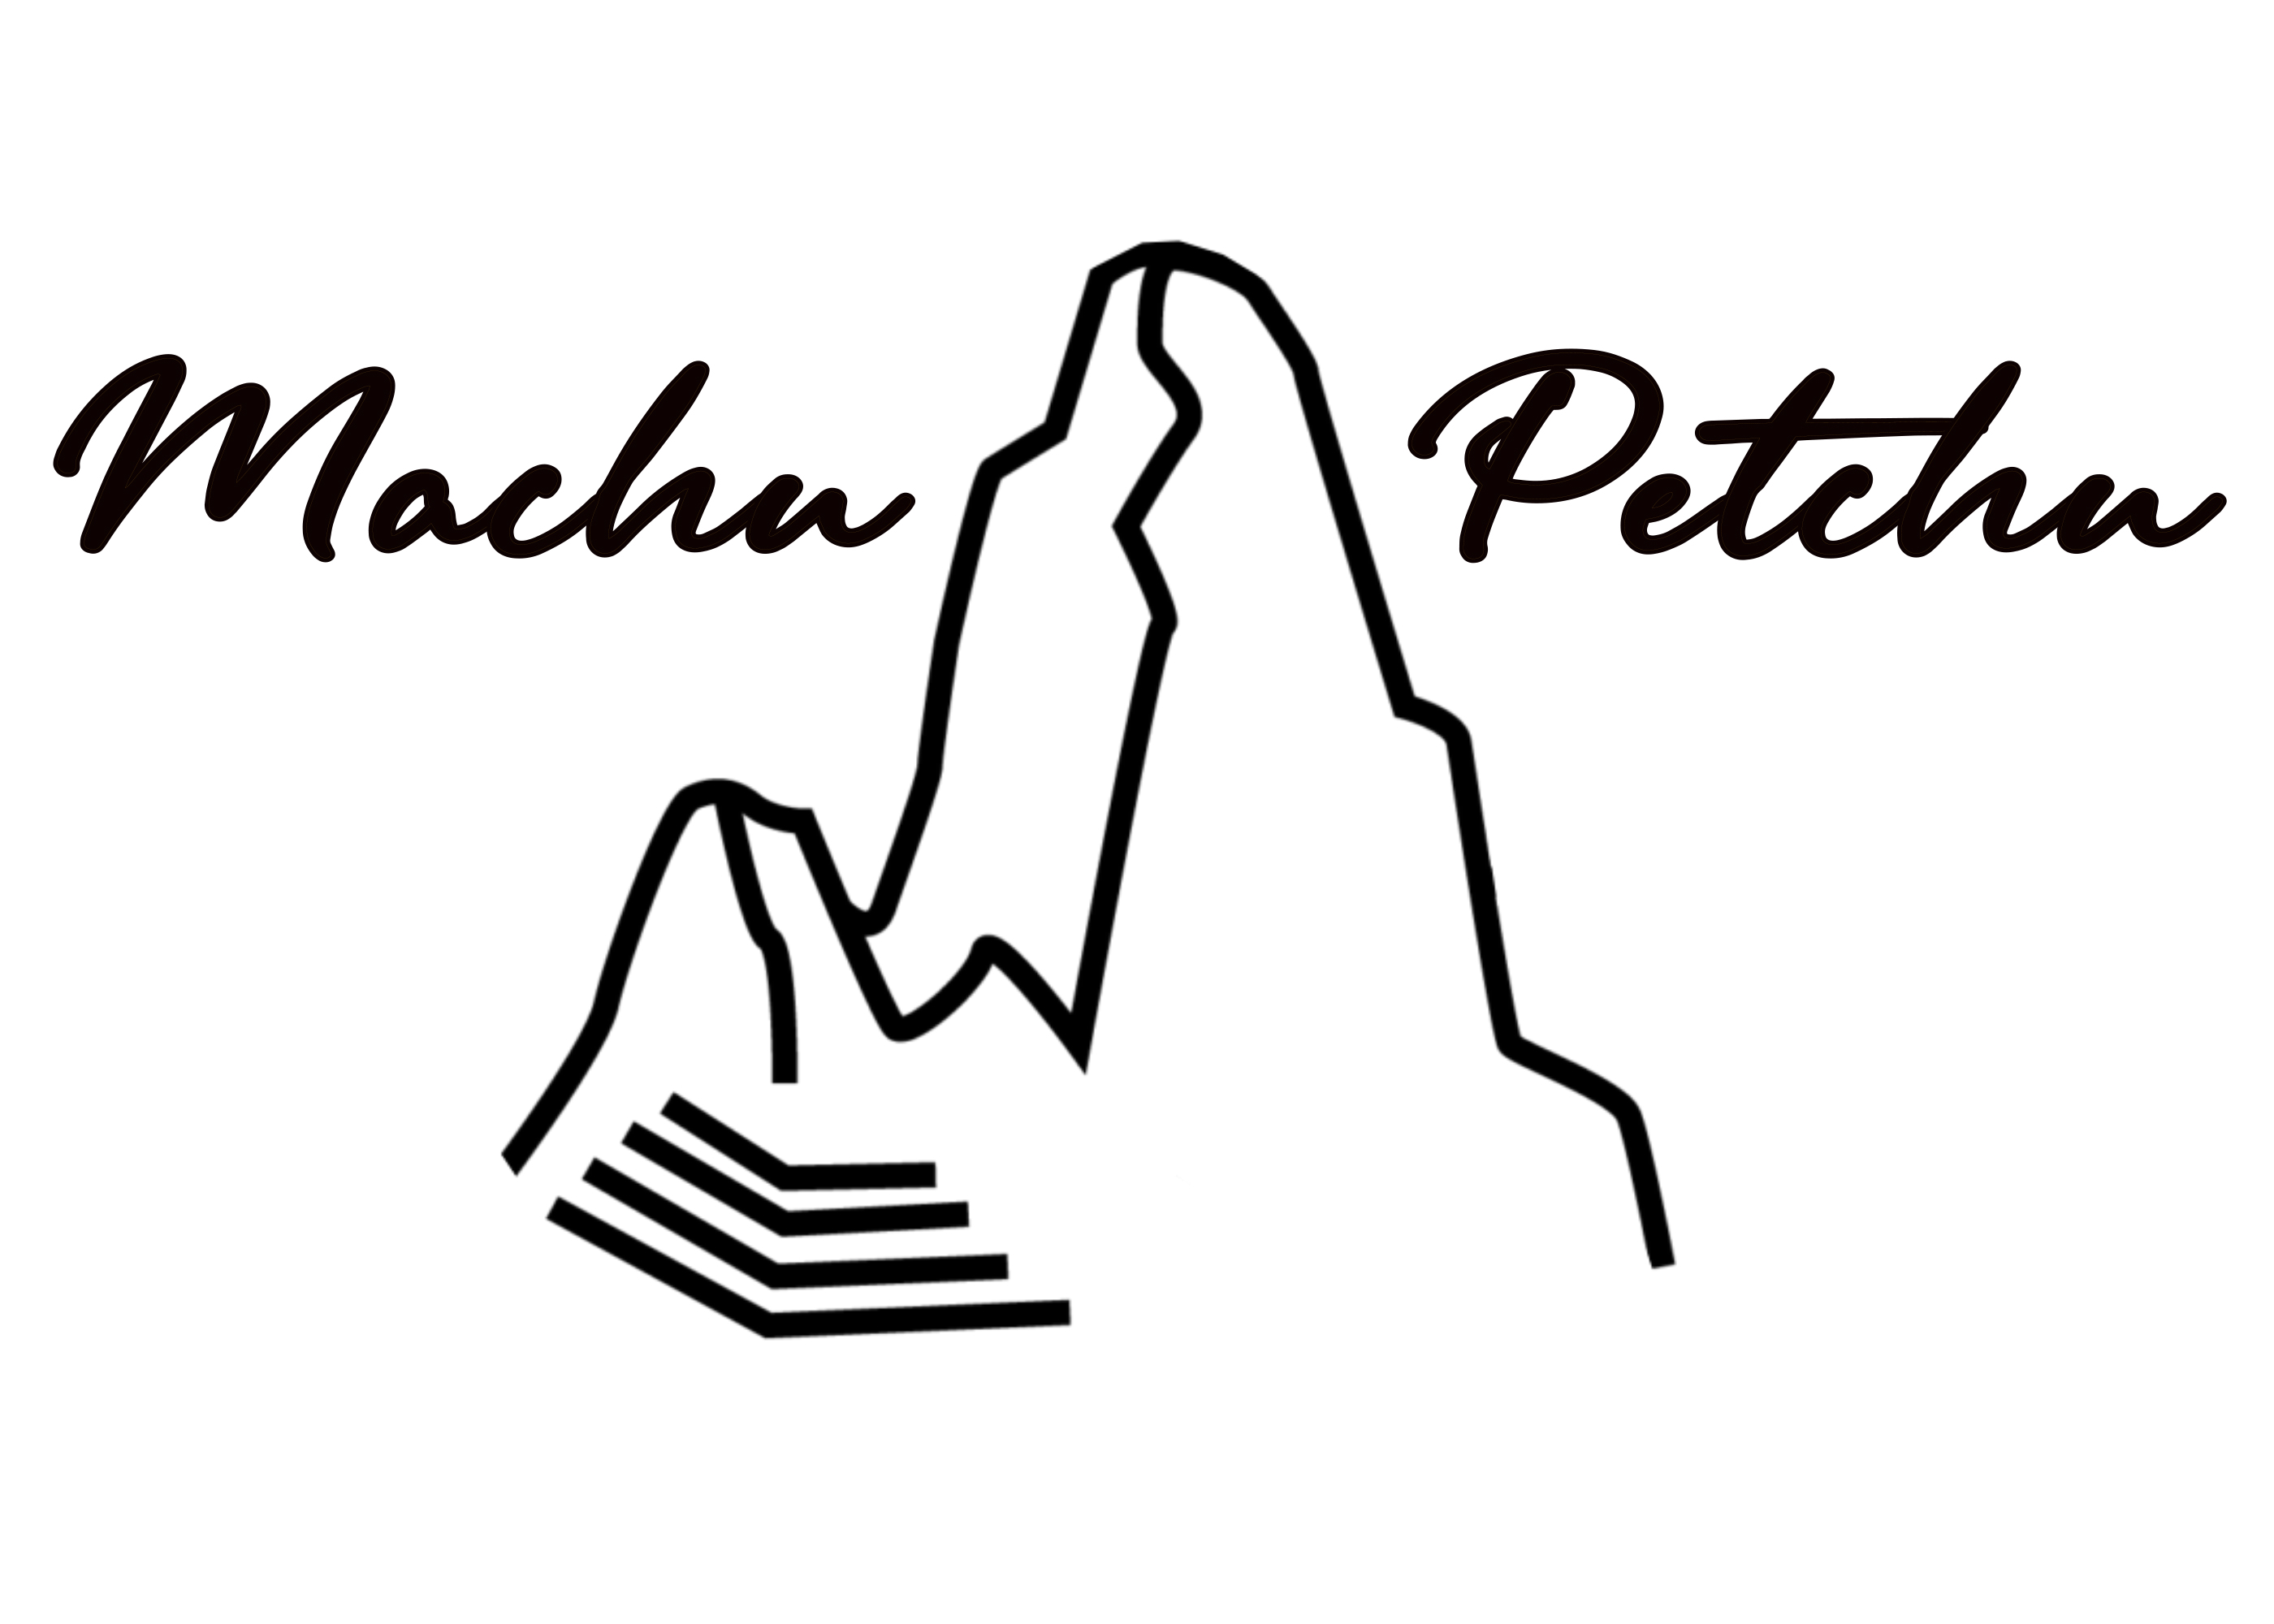 Machu Petchu